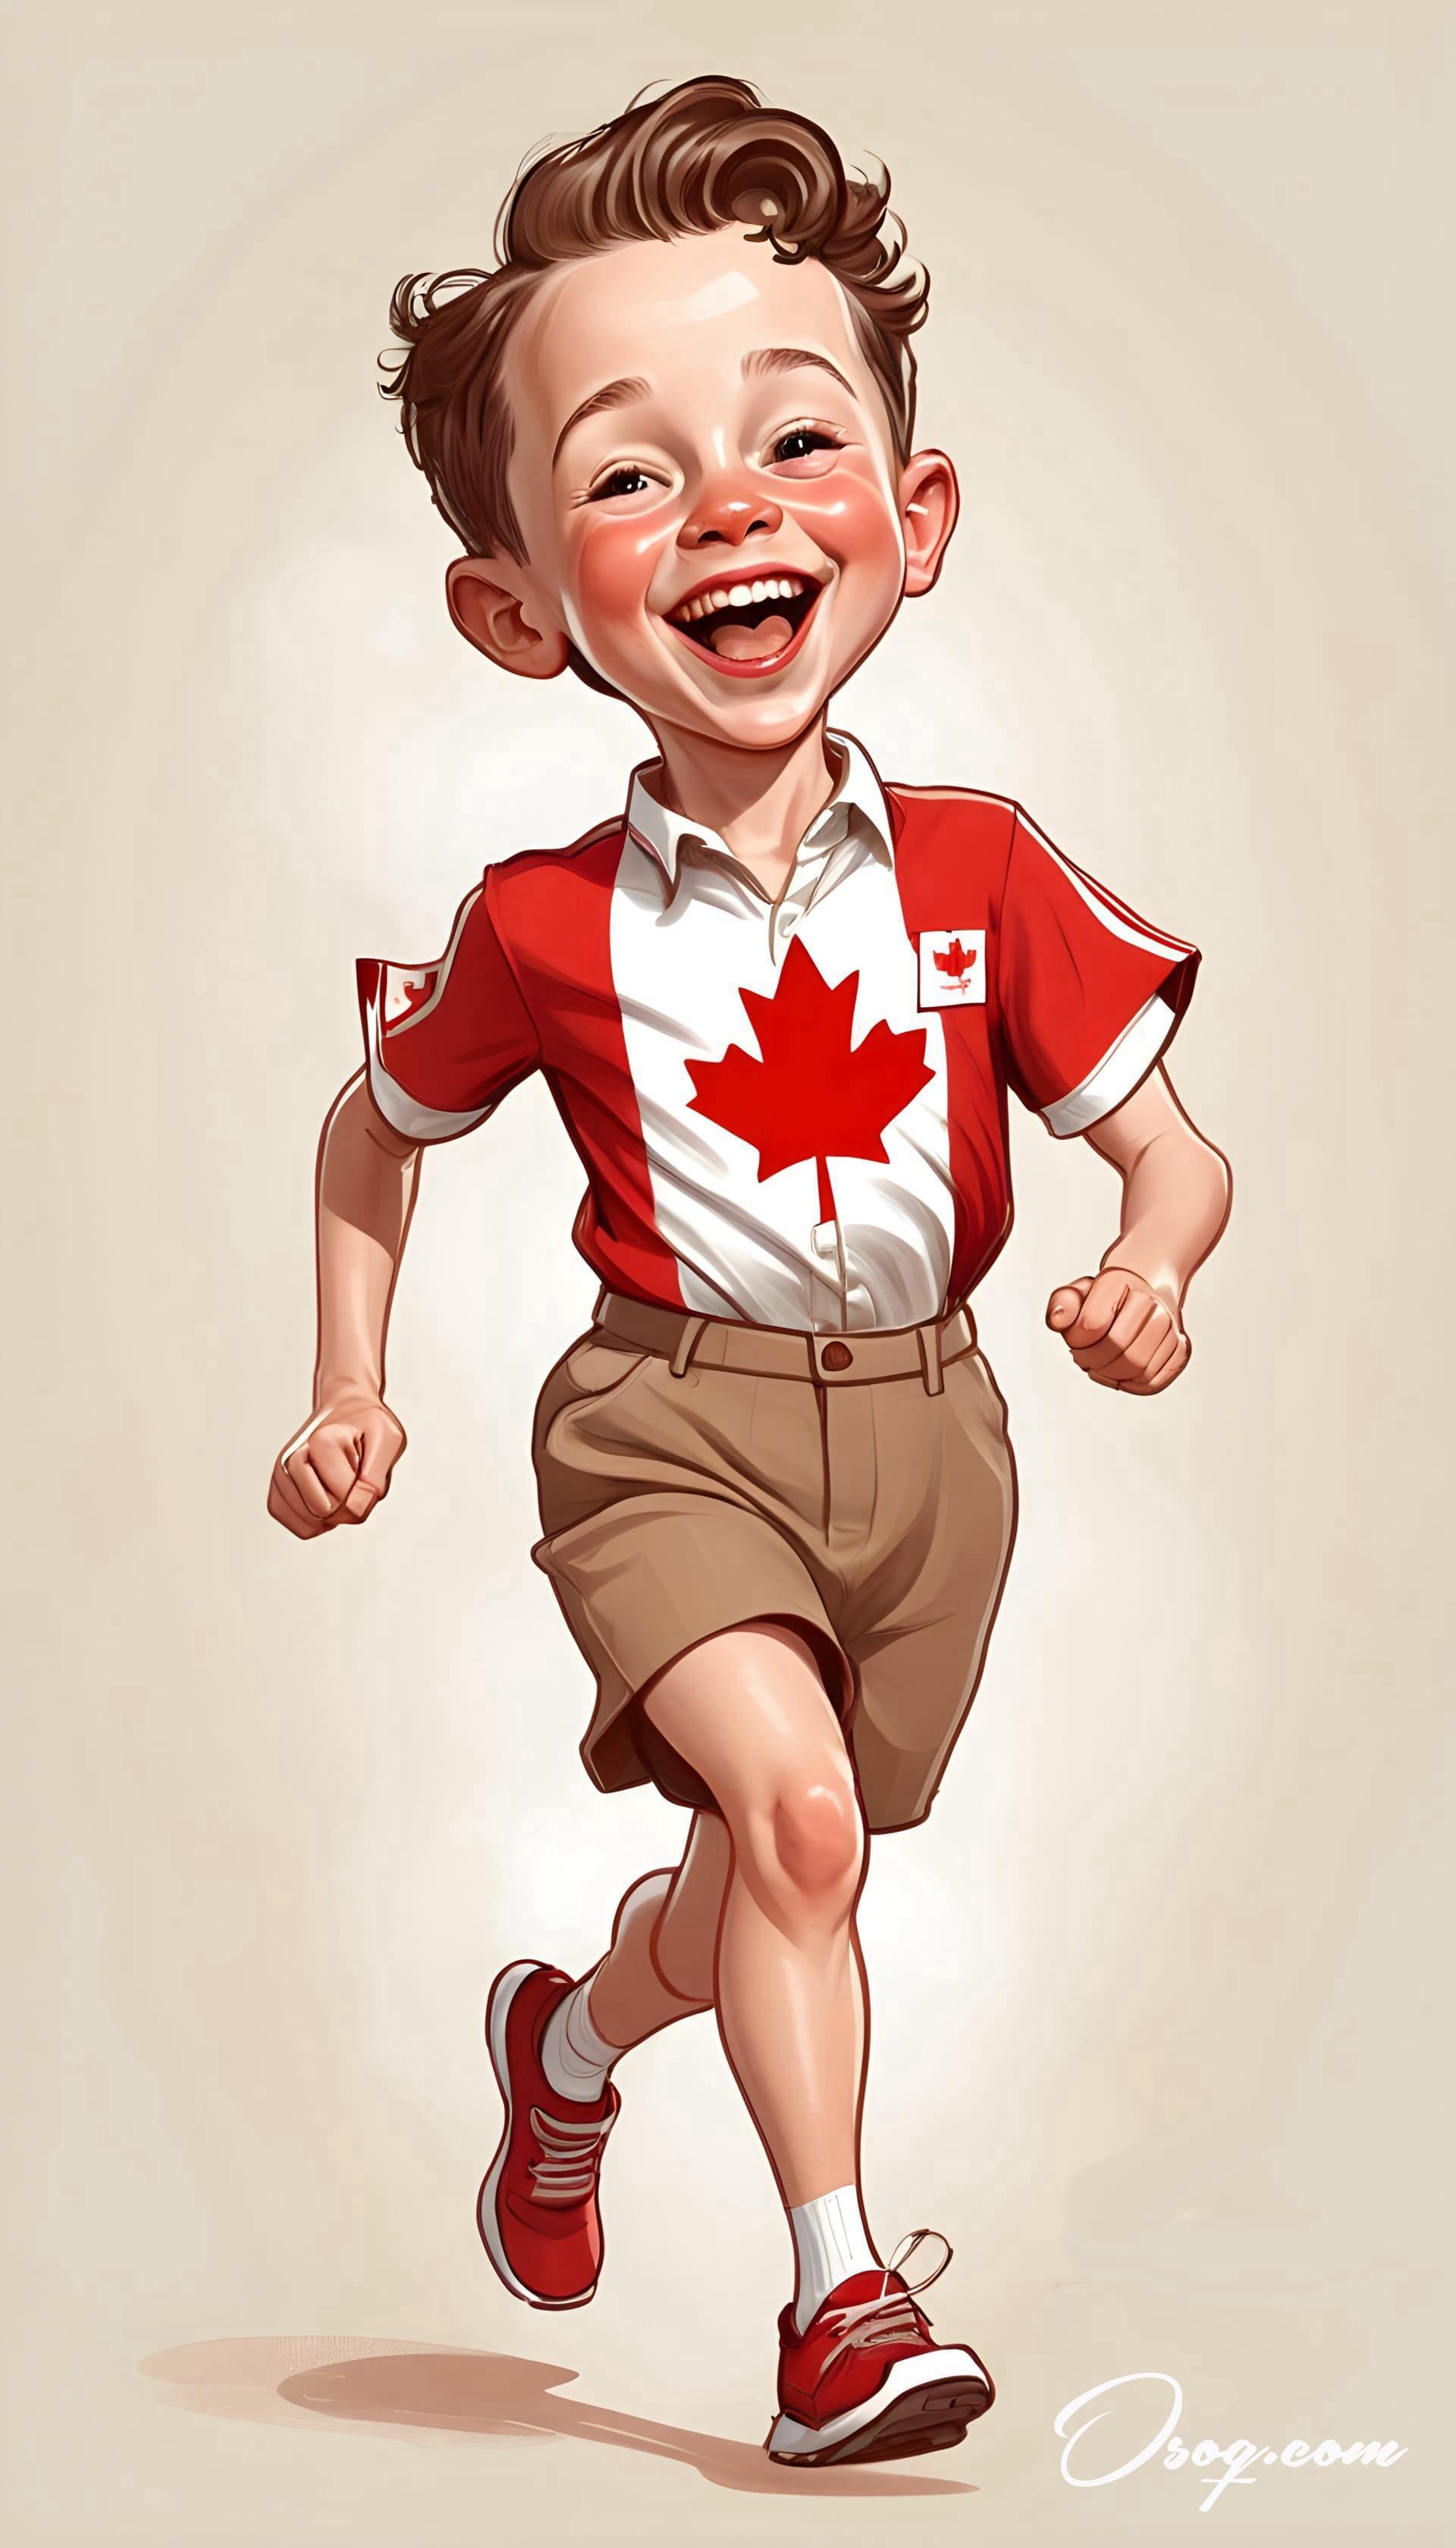 Canadian cartoon 05